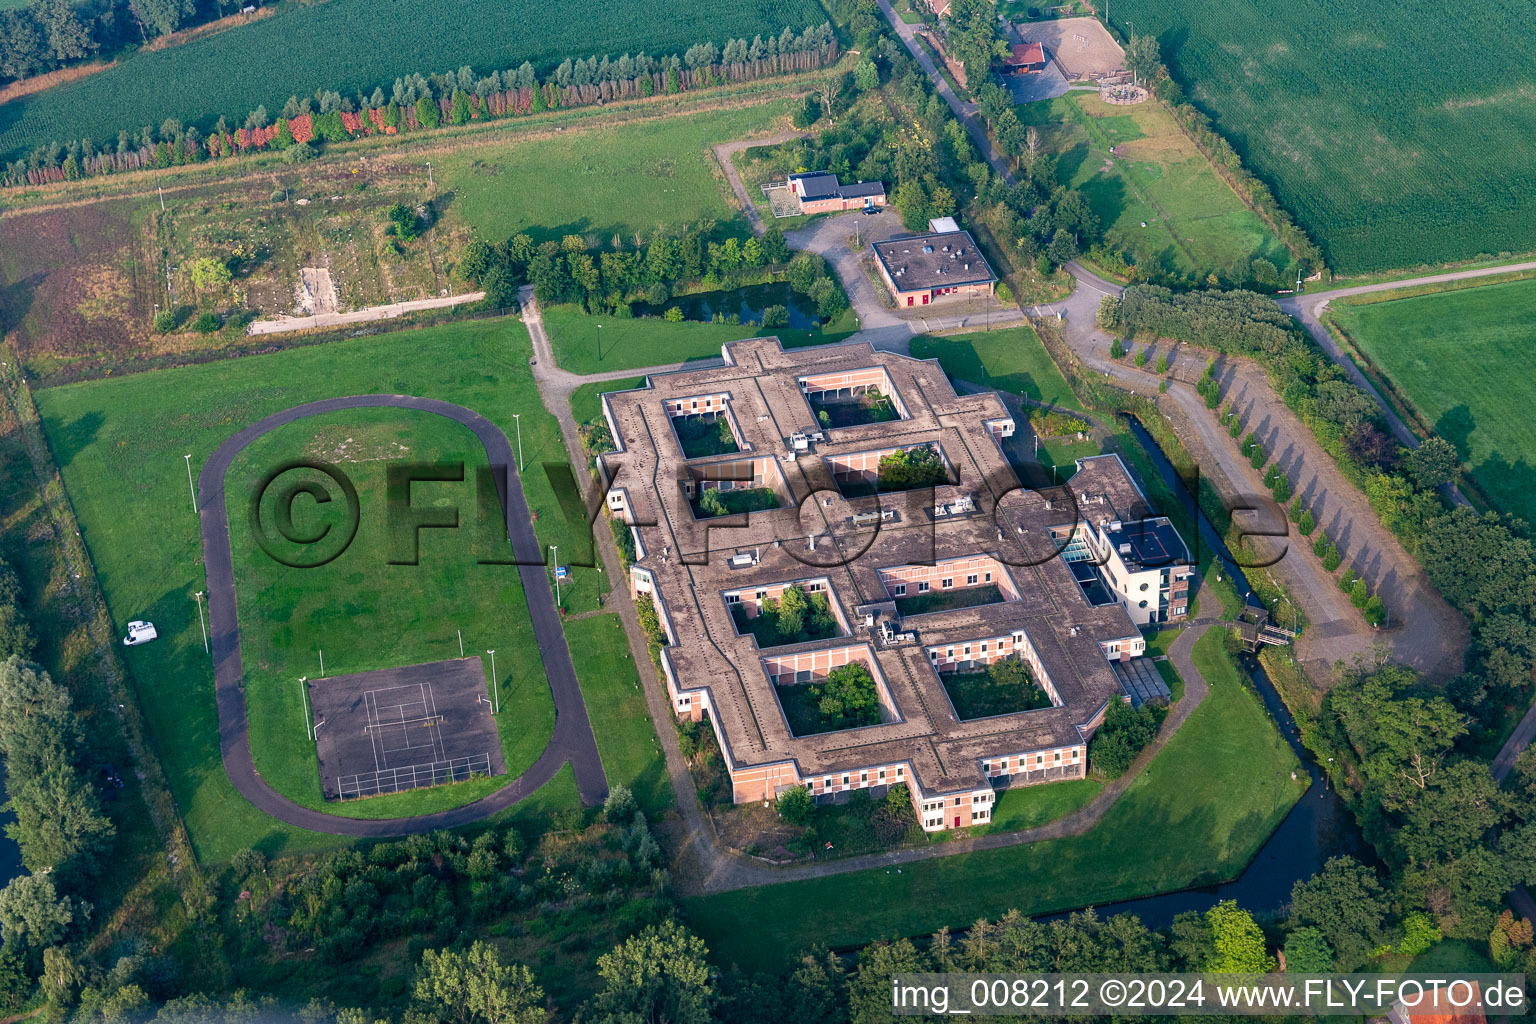 Aerial view of Prison grounds and high security fence Prison in Rekken in Gelderland, Netherlands